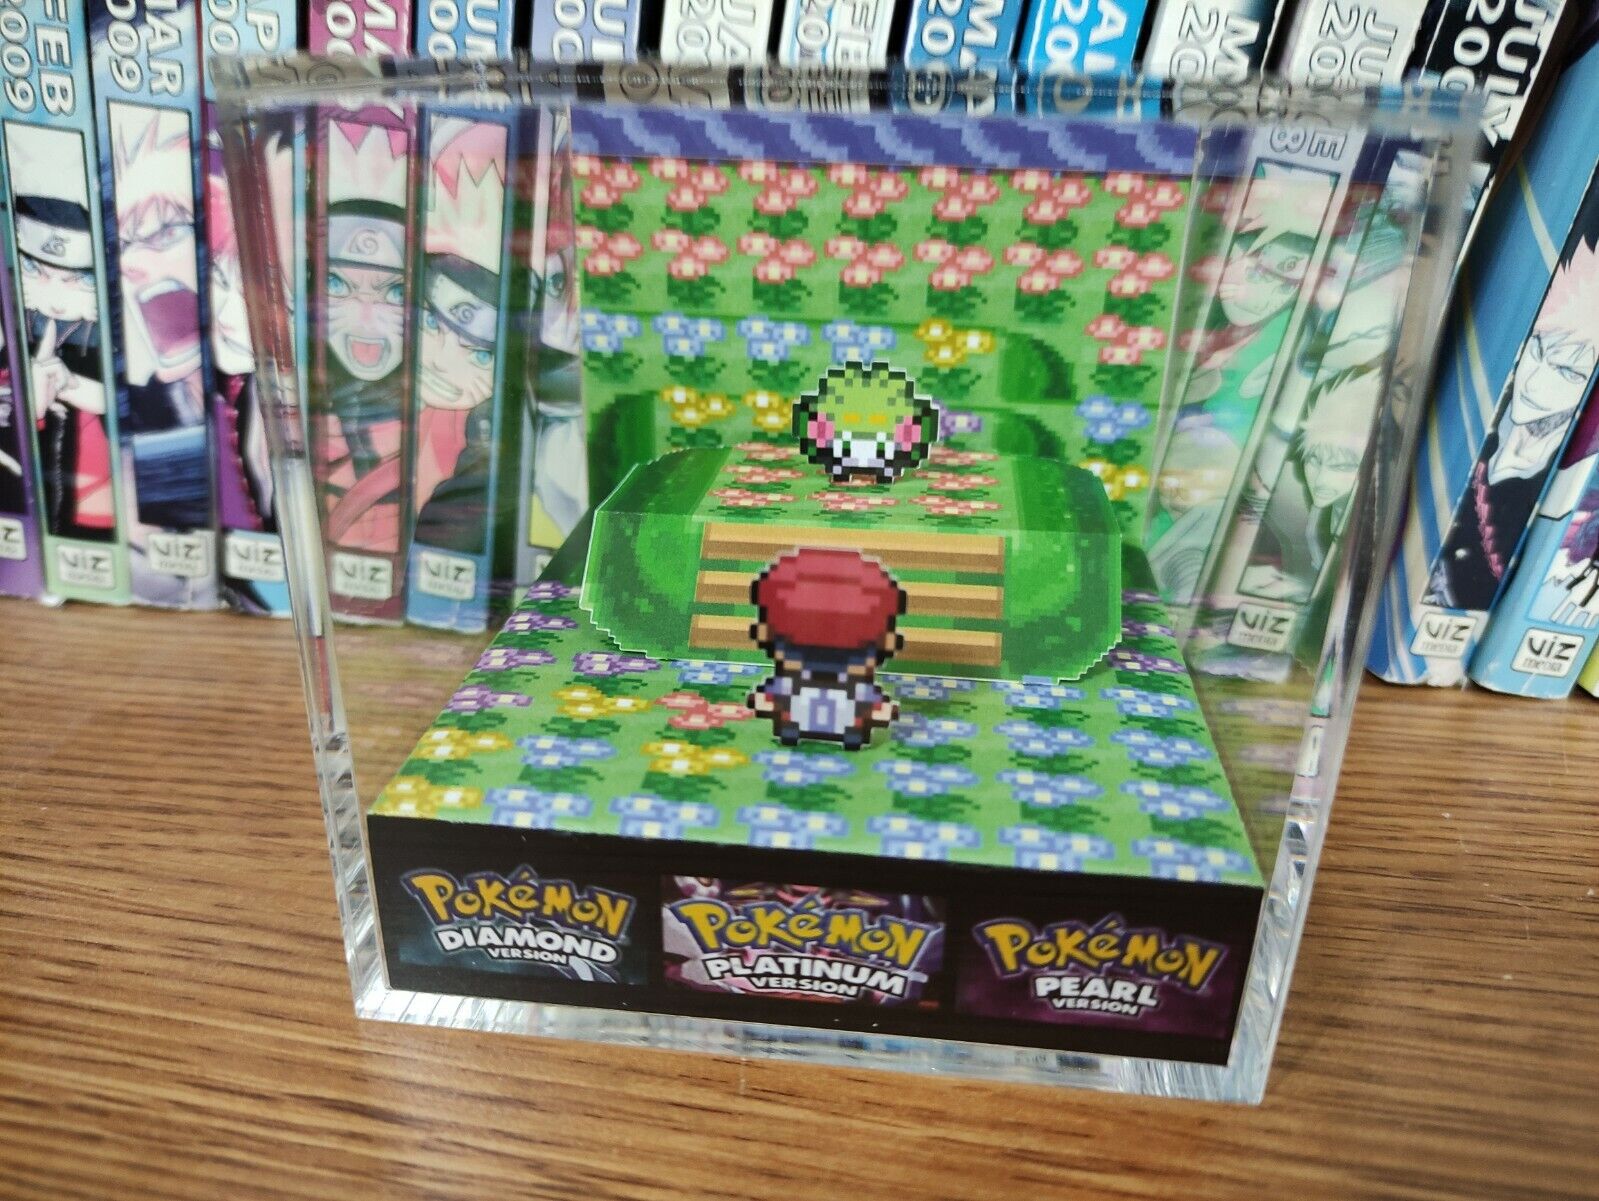 Pokemon Giratina Shiny Handmade Diorama - Gameboy / Retro Gaming Cube -  Fanart